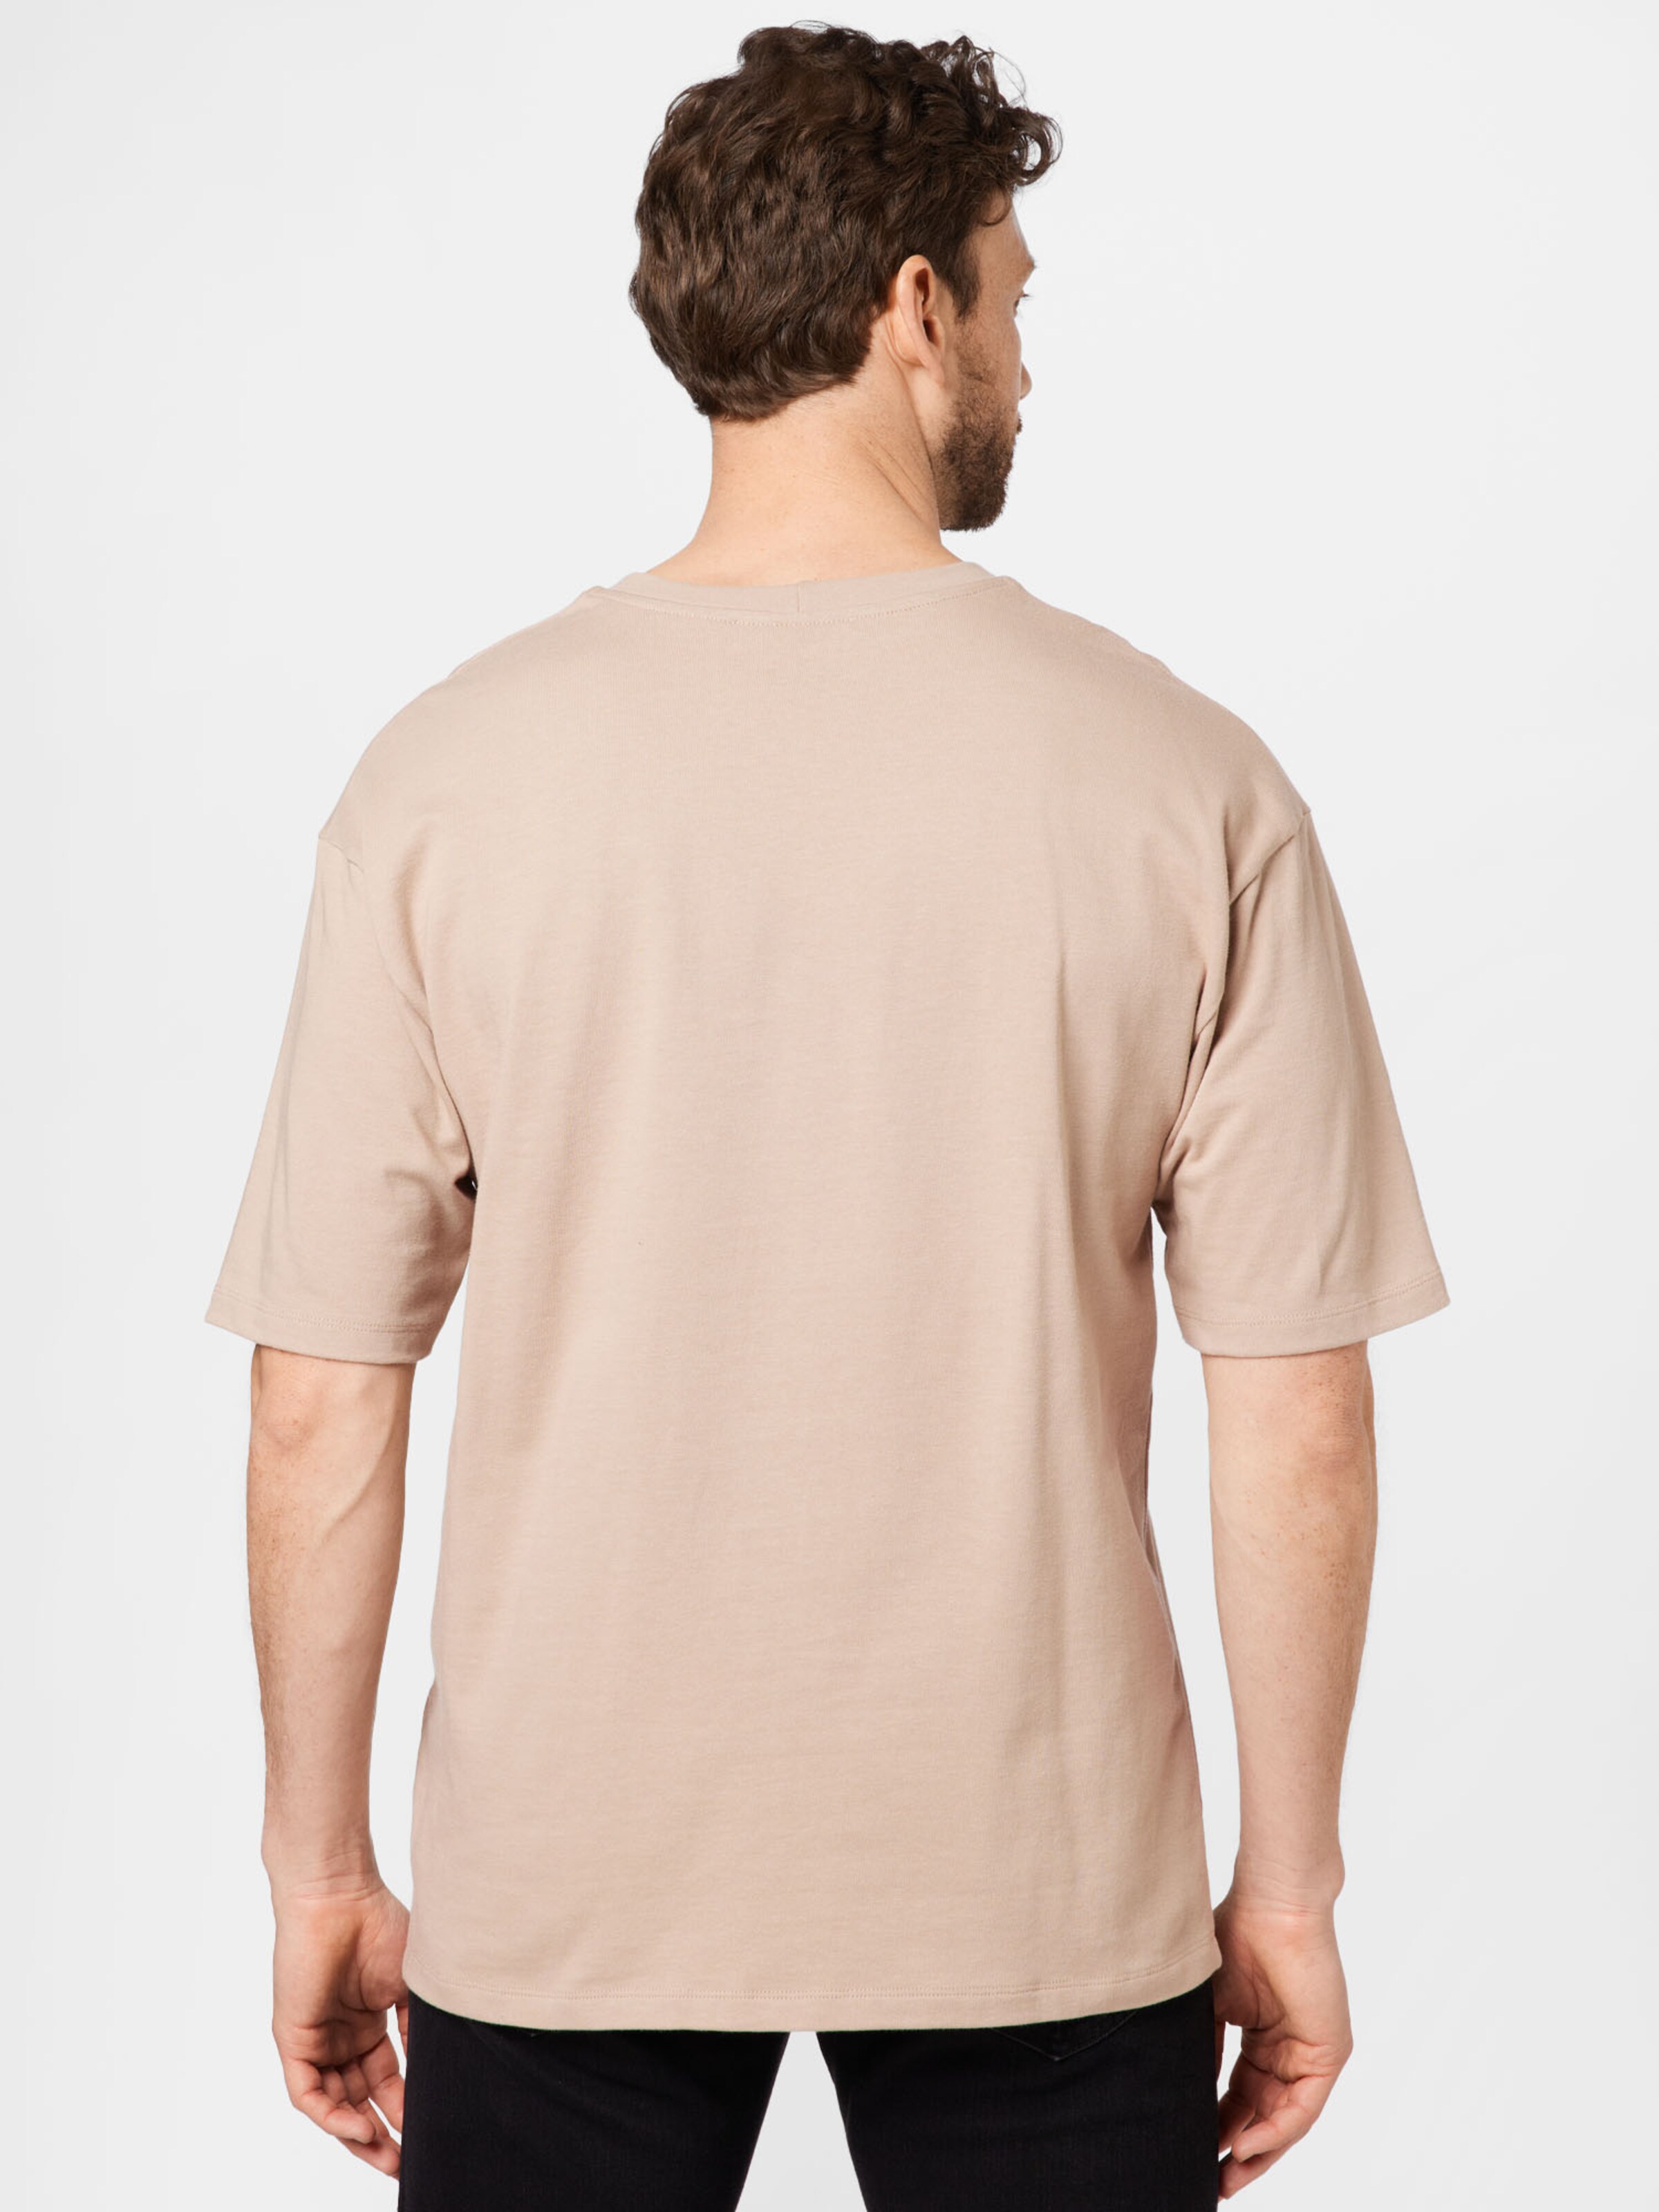 Männer Shirts Herren - Shirts & Polos 'Hanno Shirt' in Altrosa - LF69103